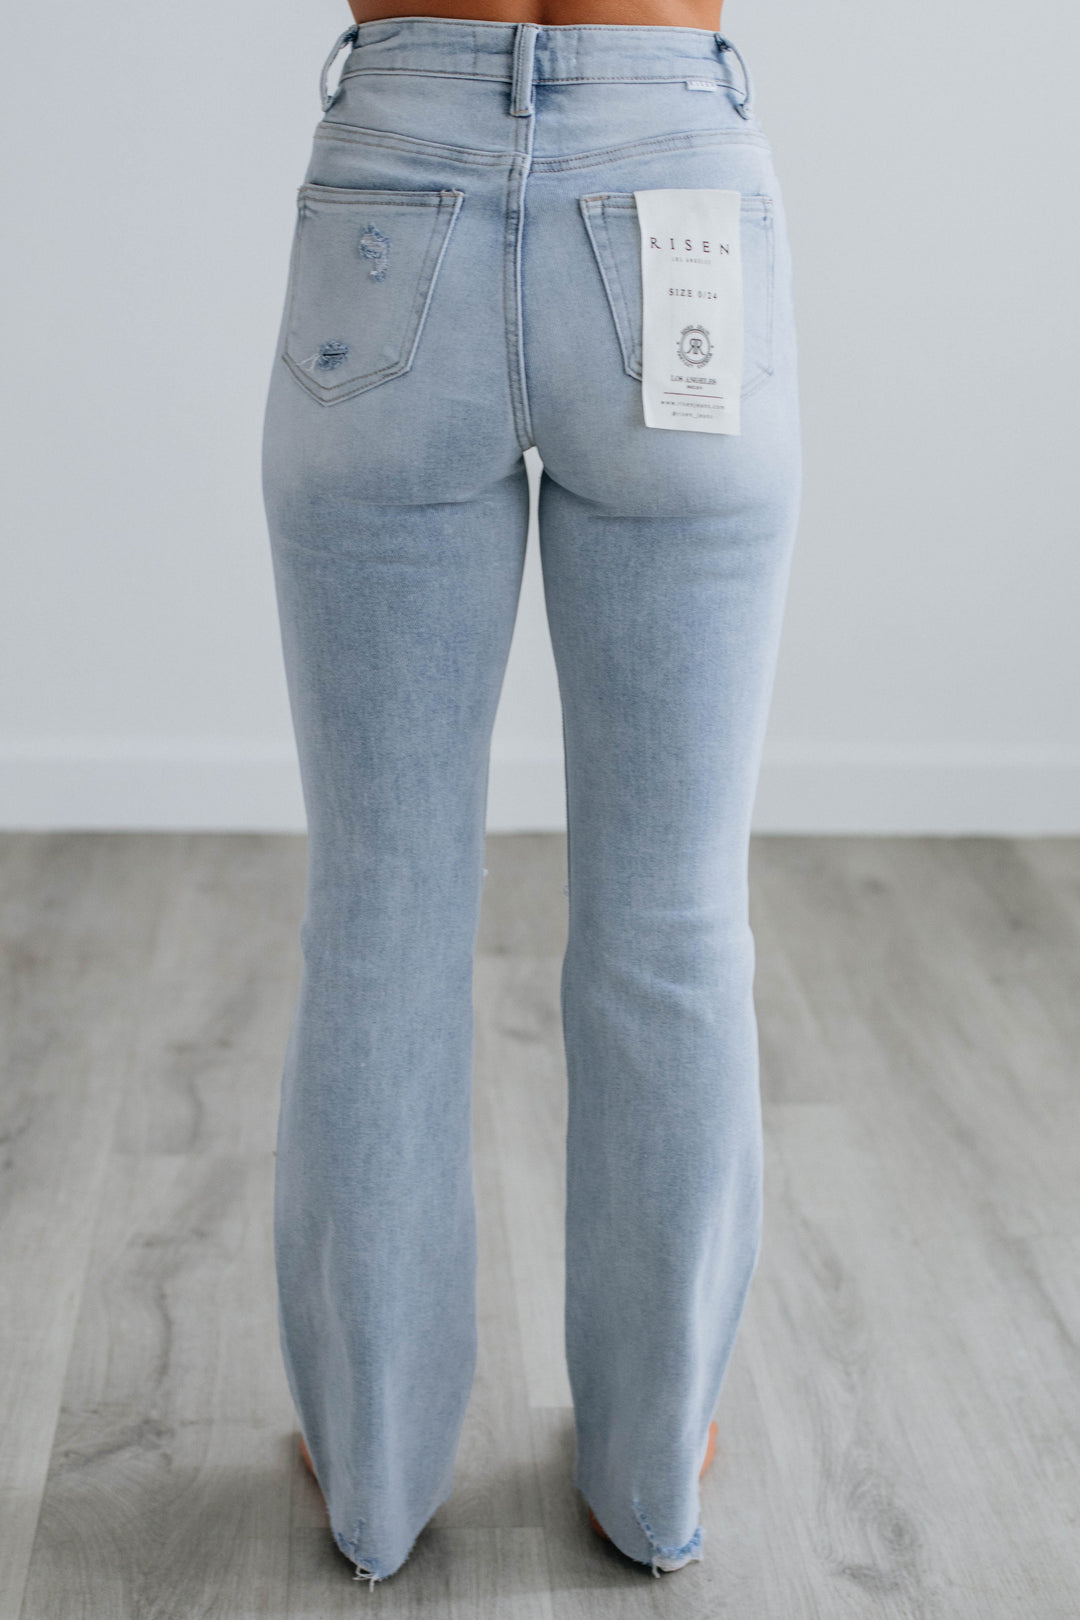 Avon Risen Jeans